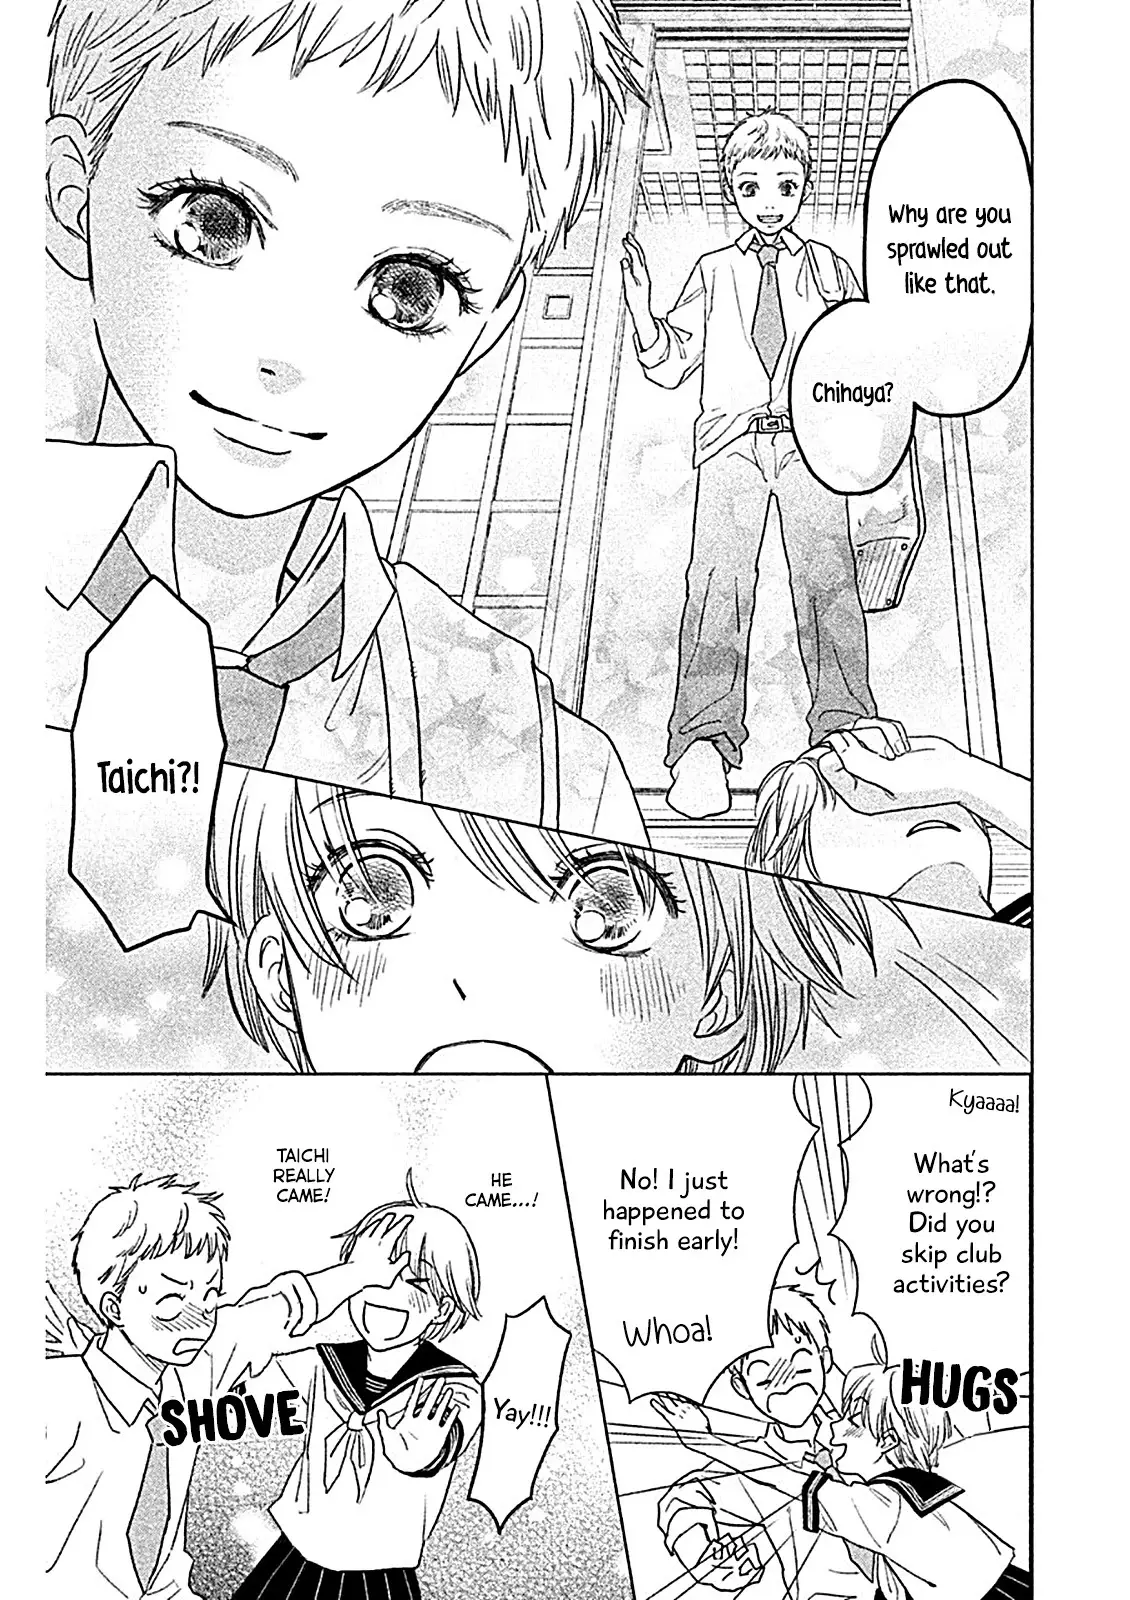 Chihayafuru: Middle School Arc - 1 page 15